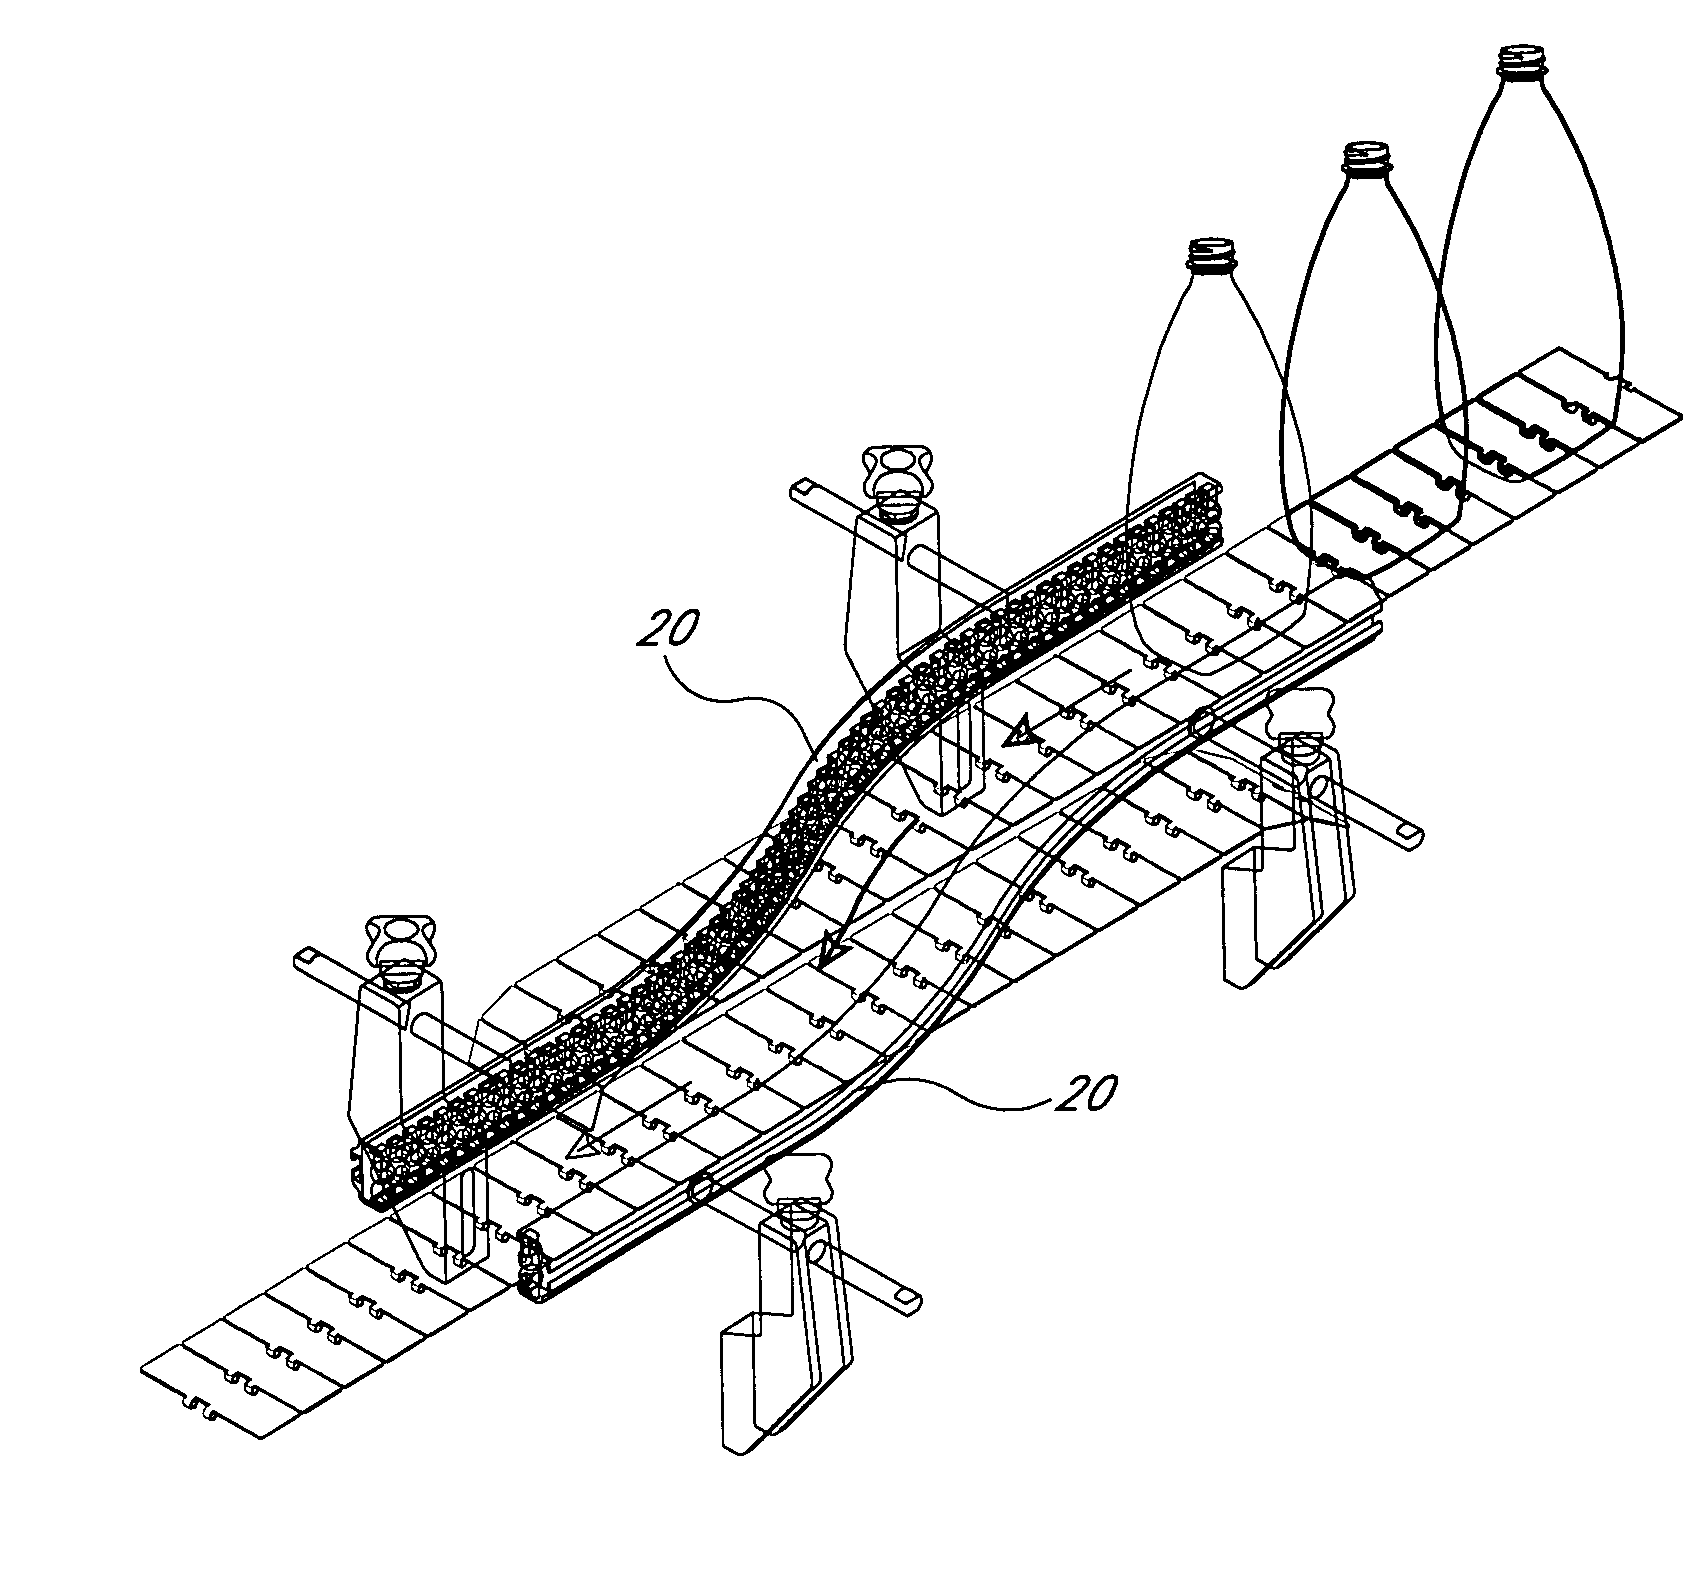 Bendable/twistable rolling conveyor guide